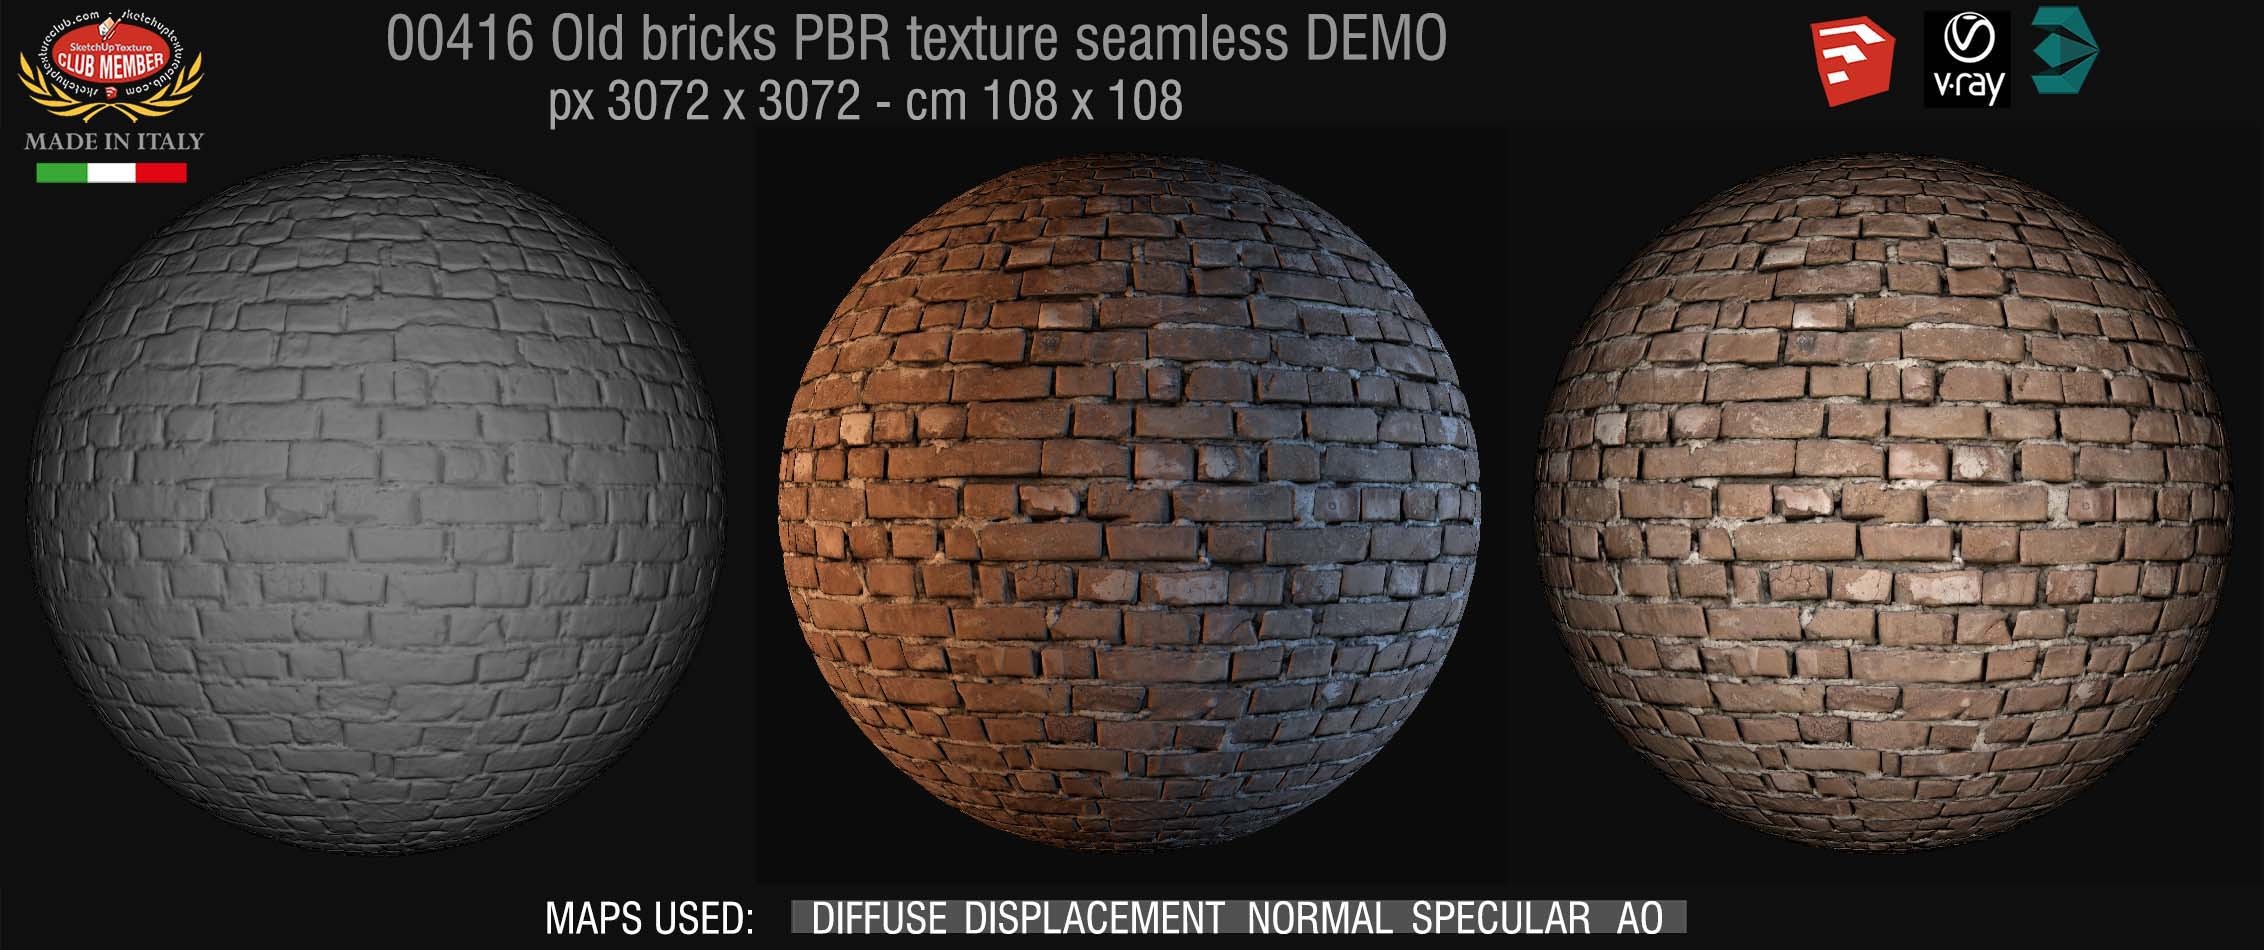 00416 Old bricks PBR texture seamless DEMO